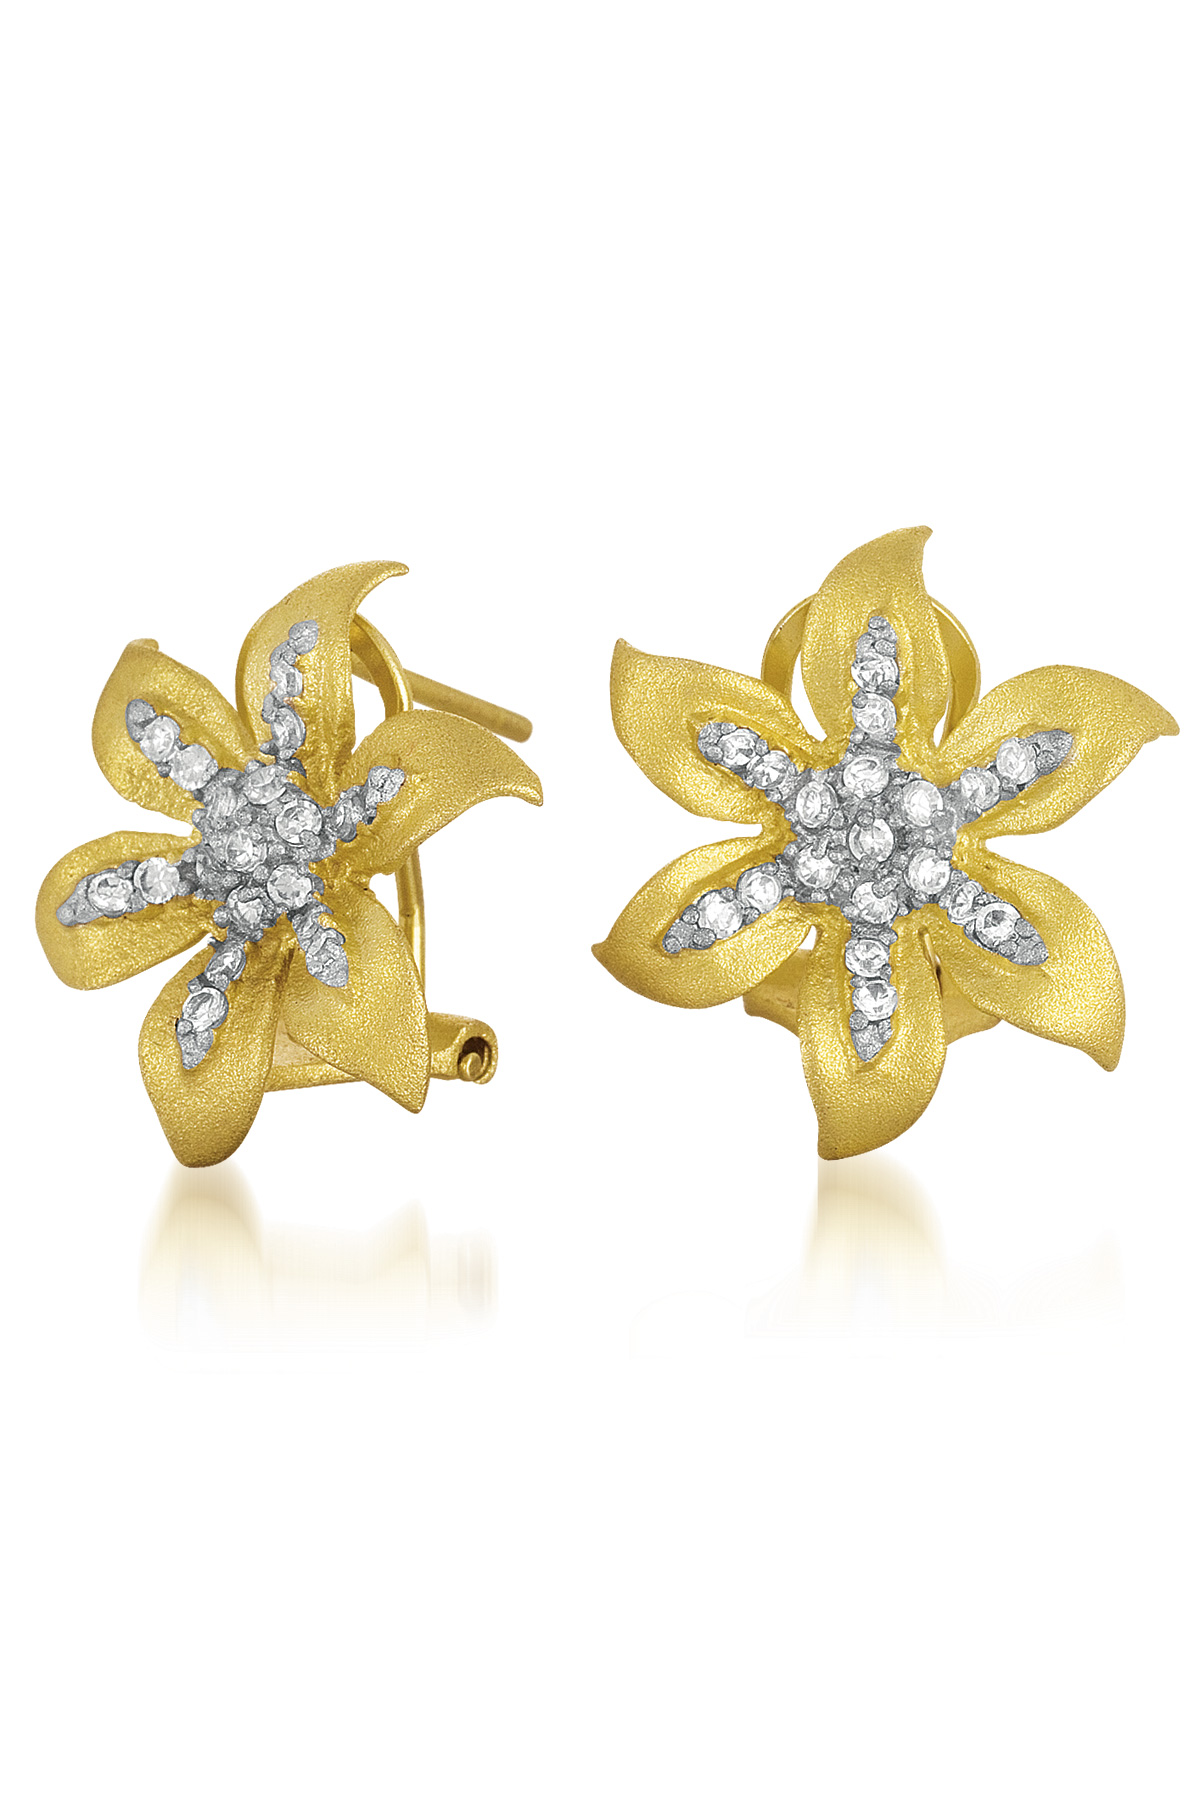 Cubic Zirconia (.925) Sterling Silver Sterling Silver Gold Plated Flower Shape Earrings